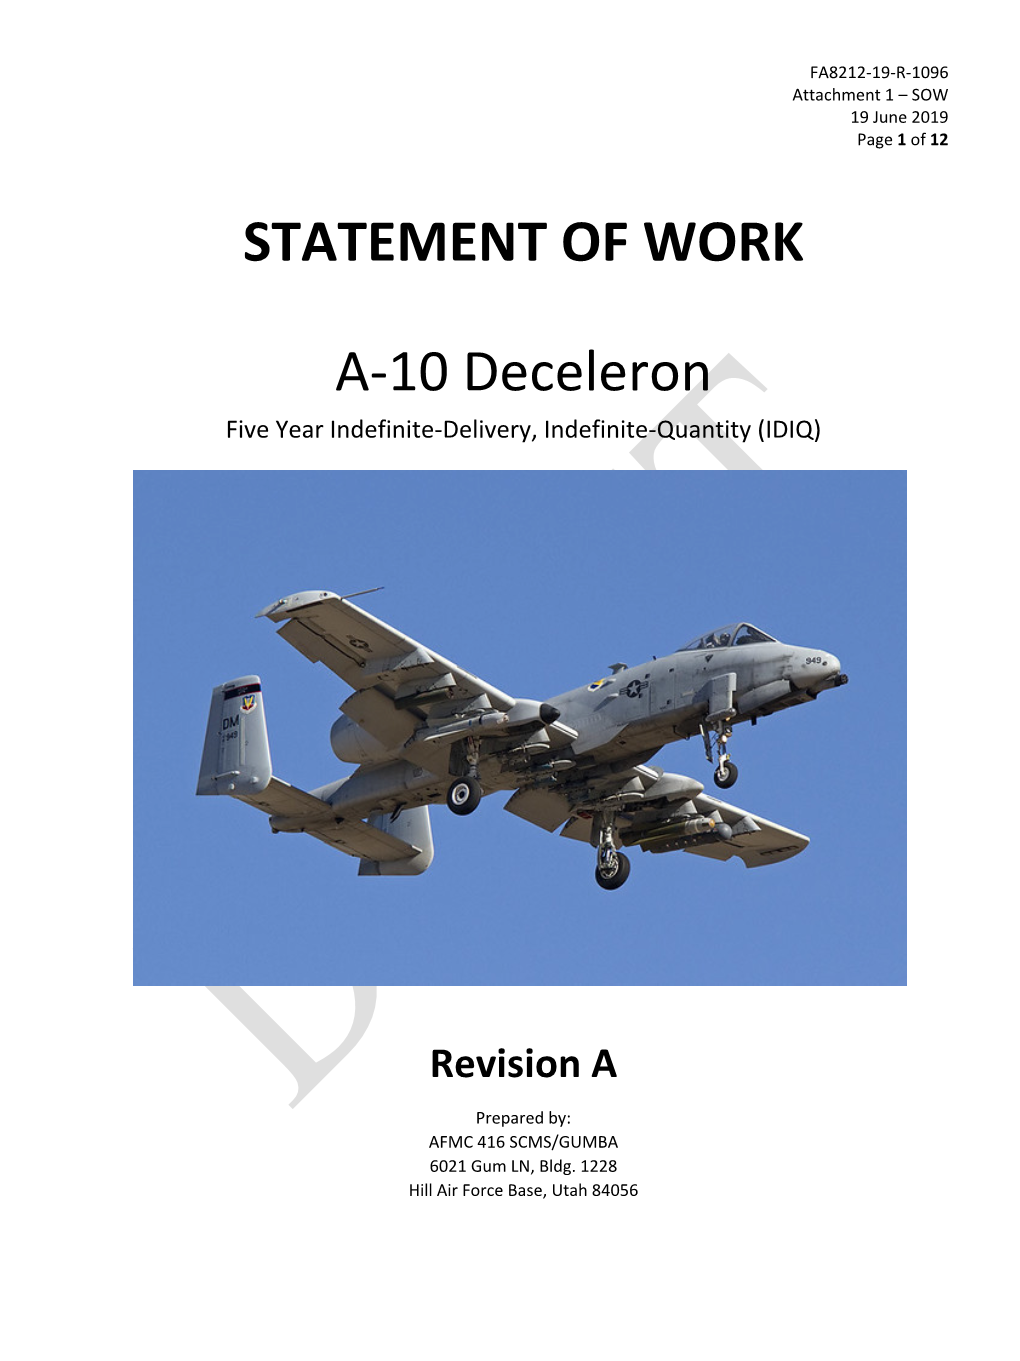 STATEMENT of WORK A-10 Deceleron